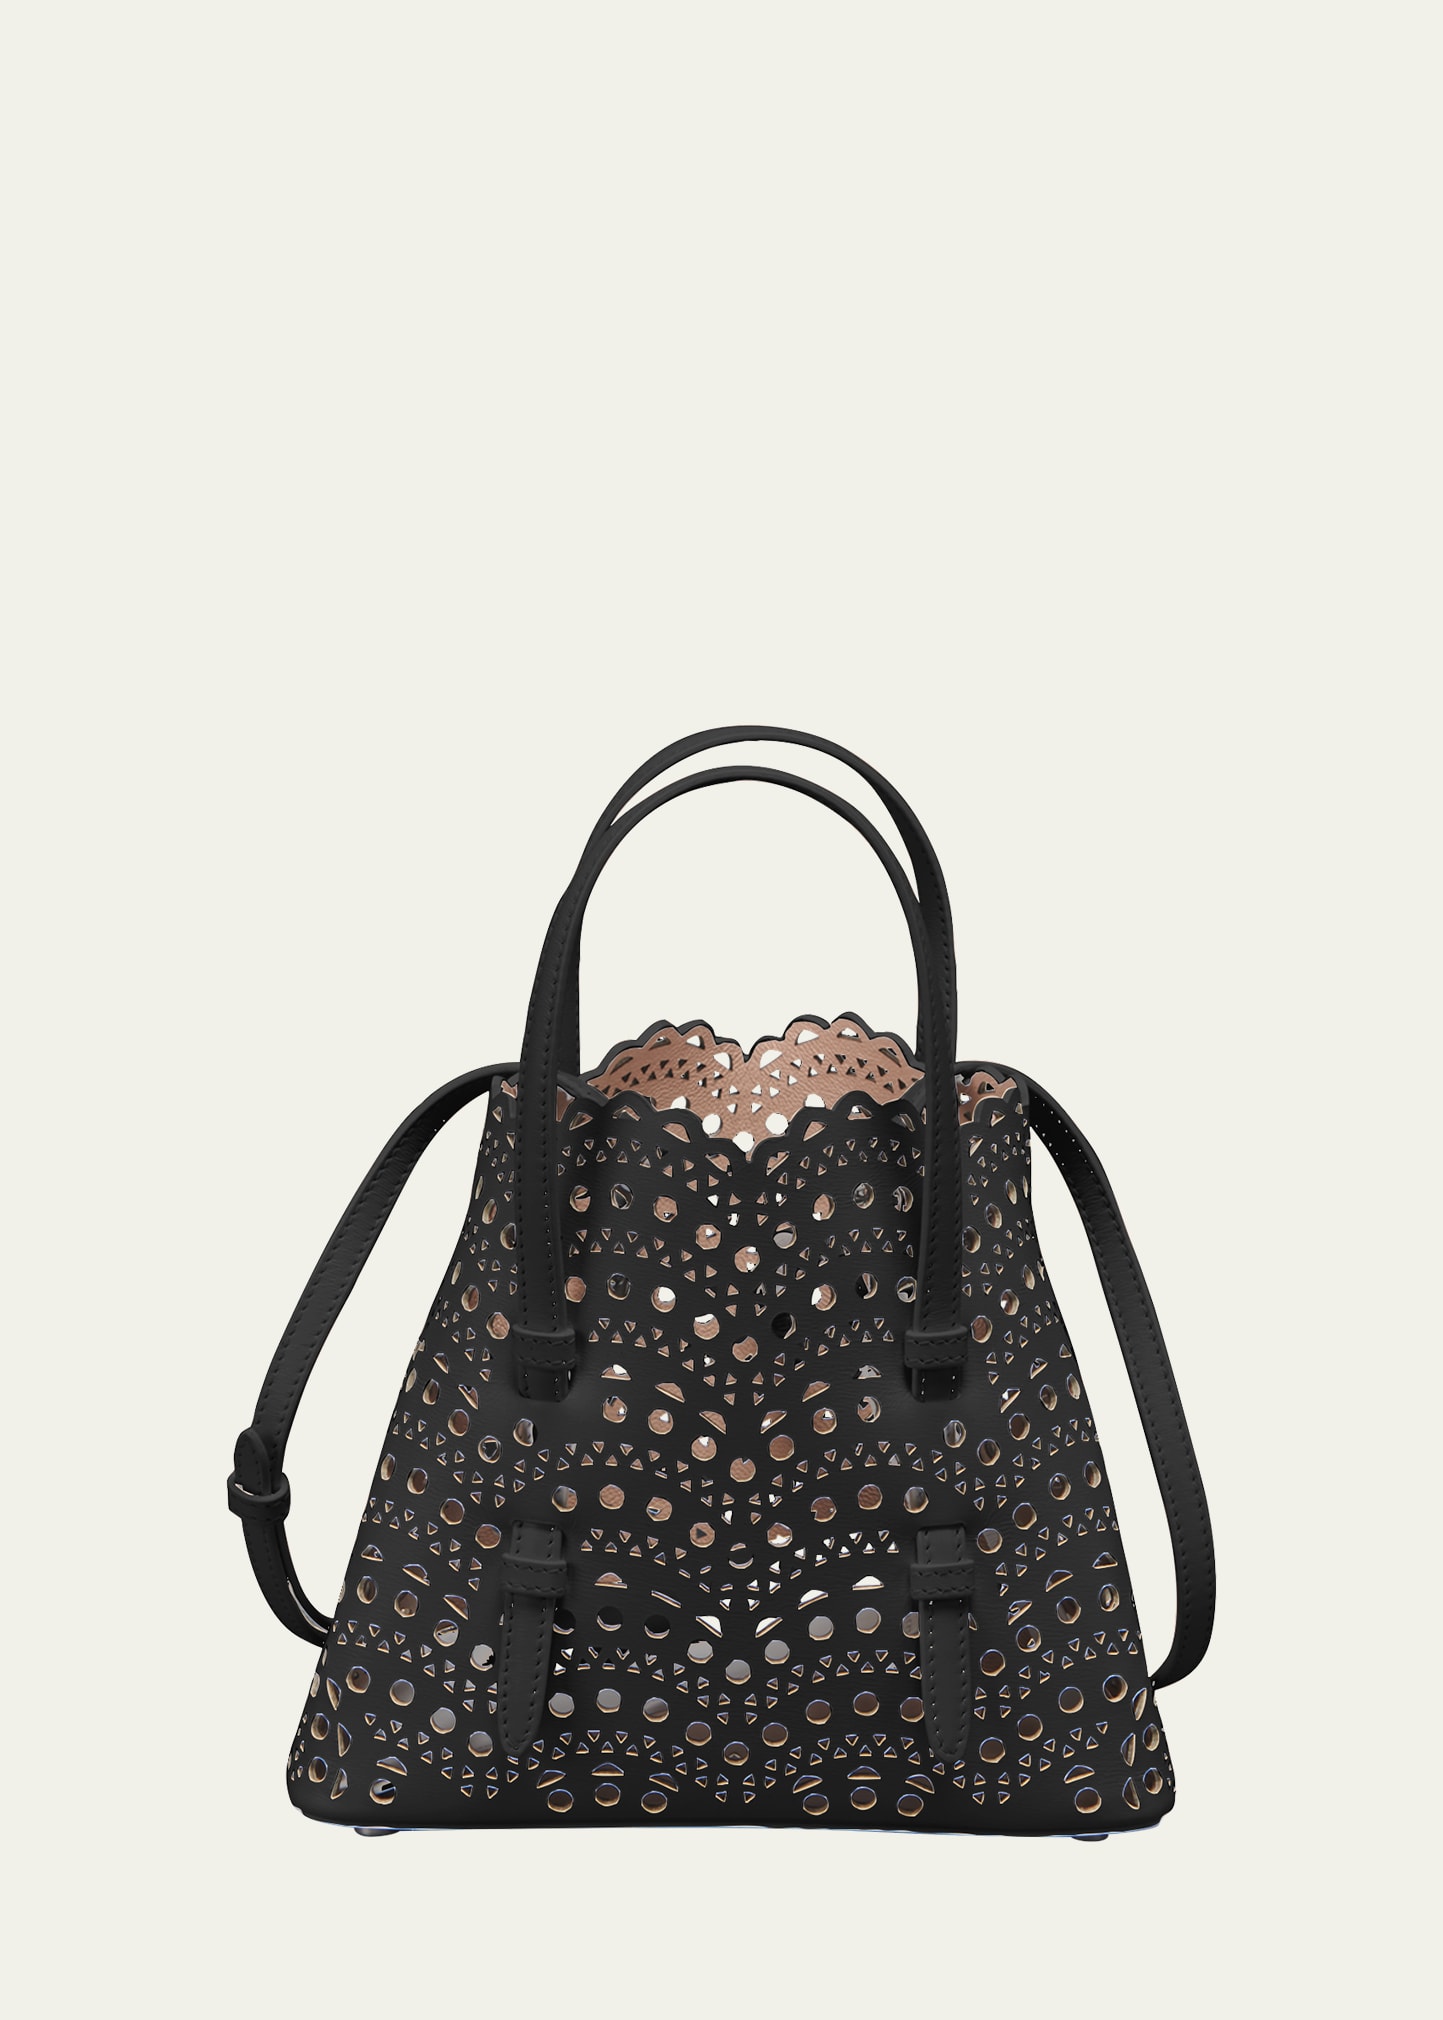 Alaia Handbags | Bergdorf Goodman